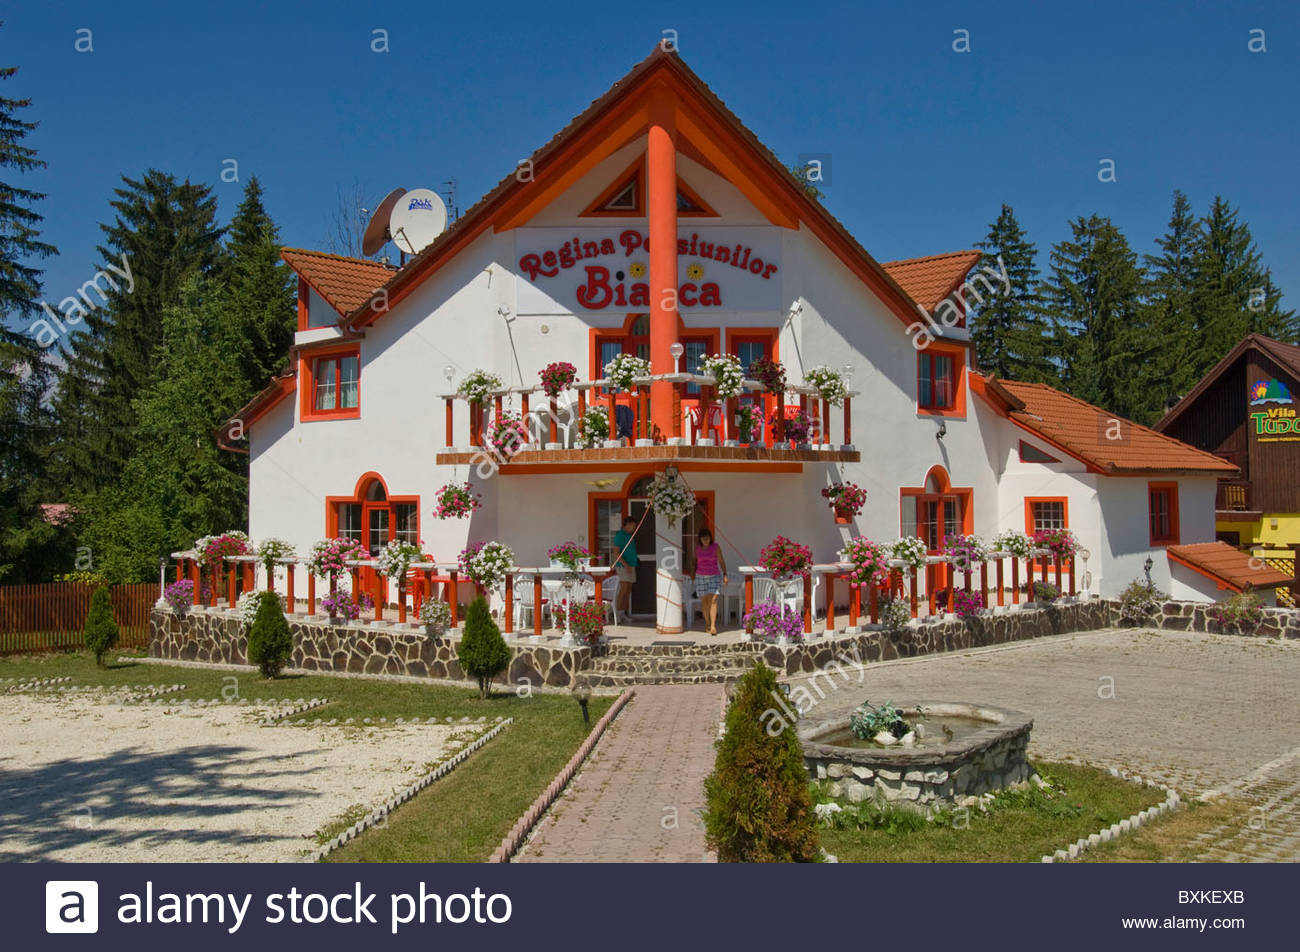 Country Hotel, Transylvania, Romania Stock Photo: 33620227 - Alamy